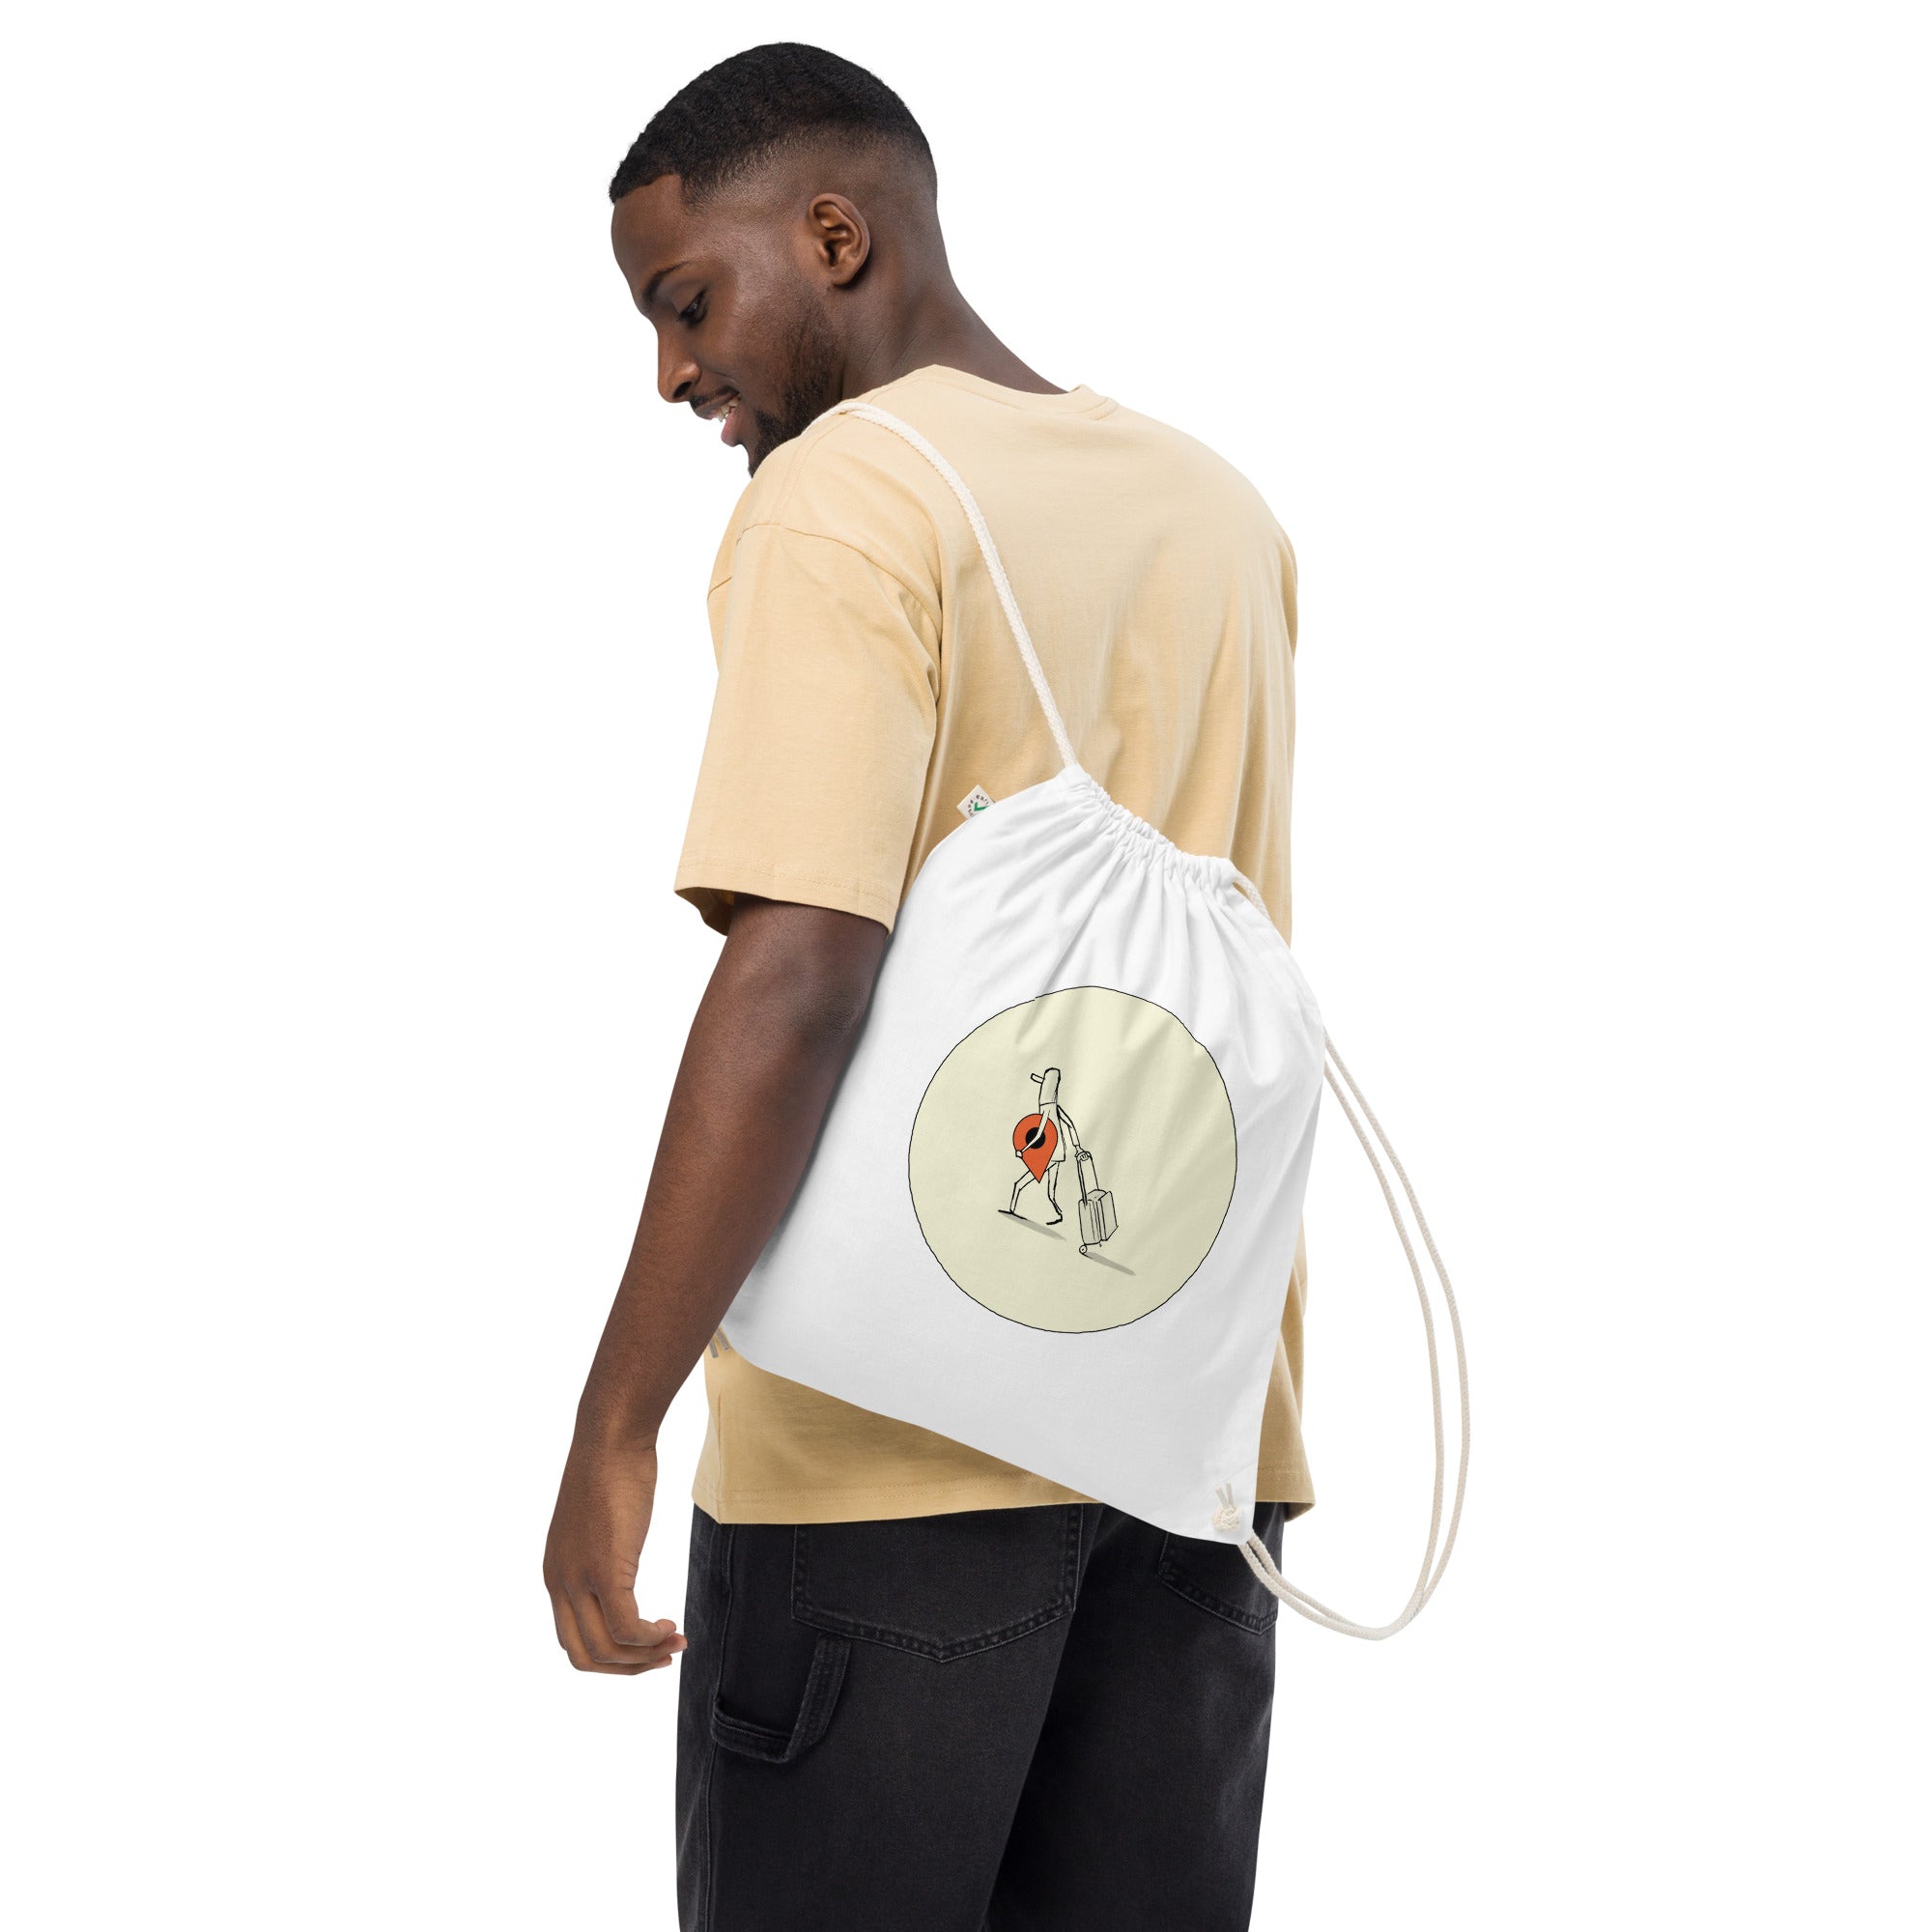 The Traveller Organic cotton drawstring bag